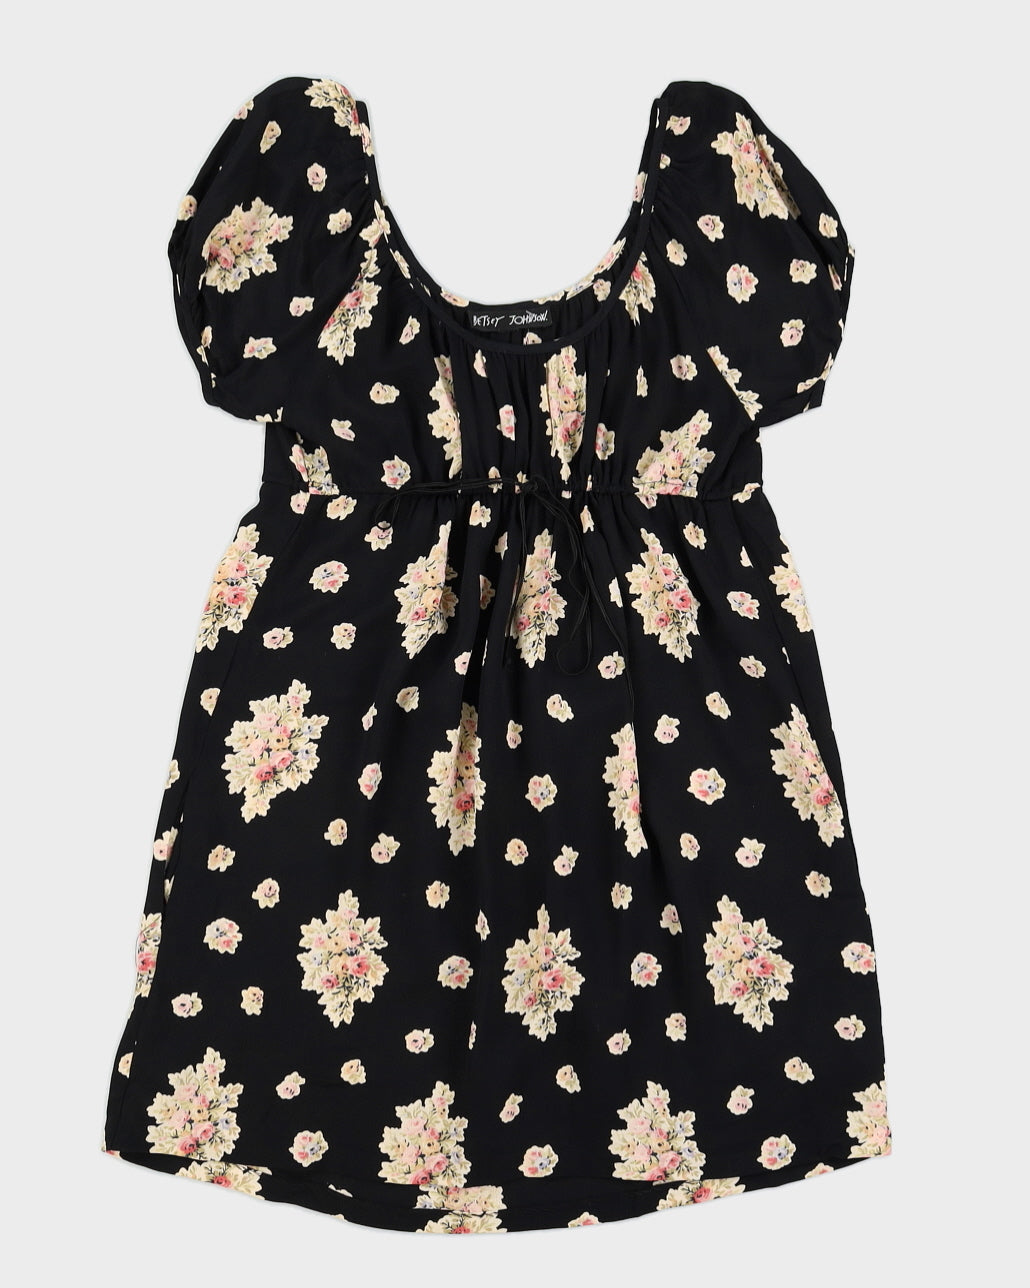 Betsey Johnson Black Floral Milkmaid Style Mini Dress - L